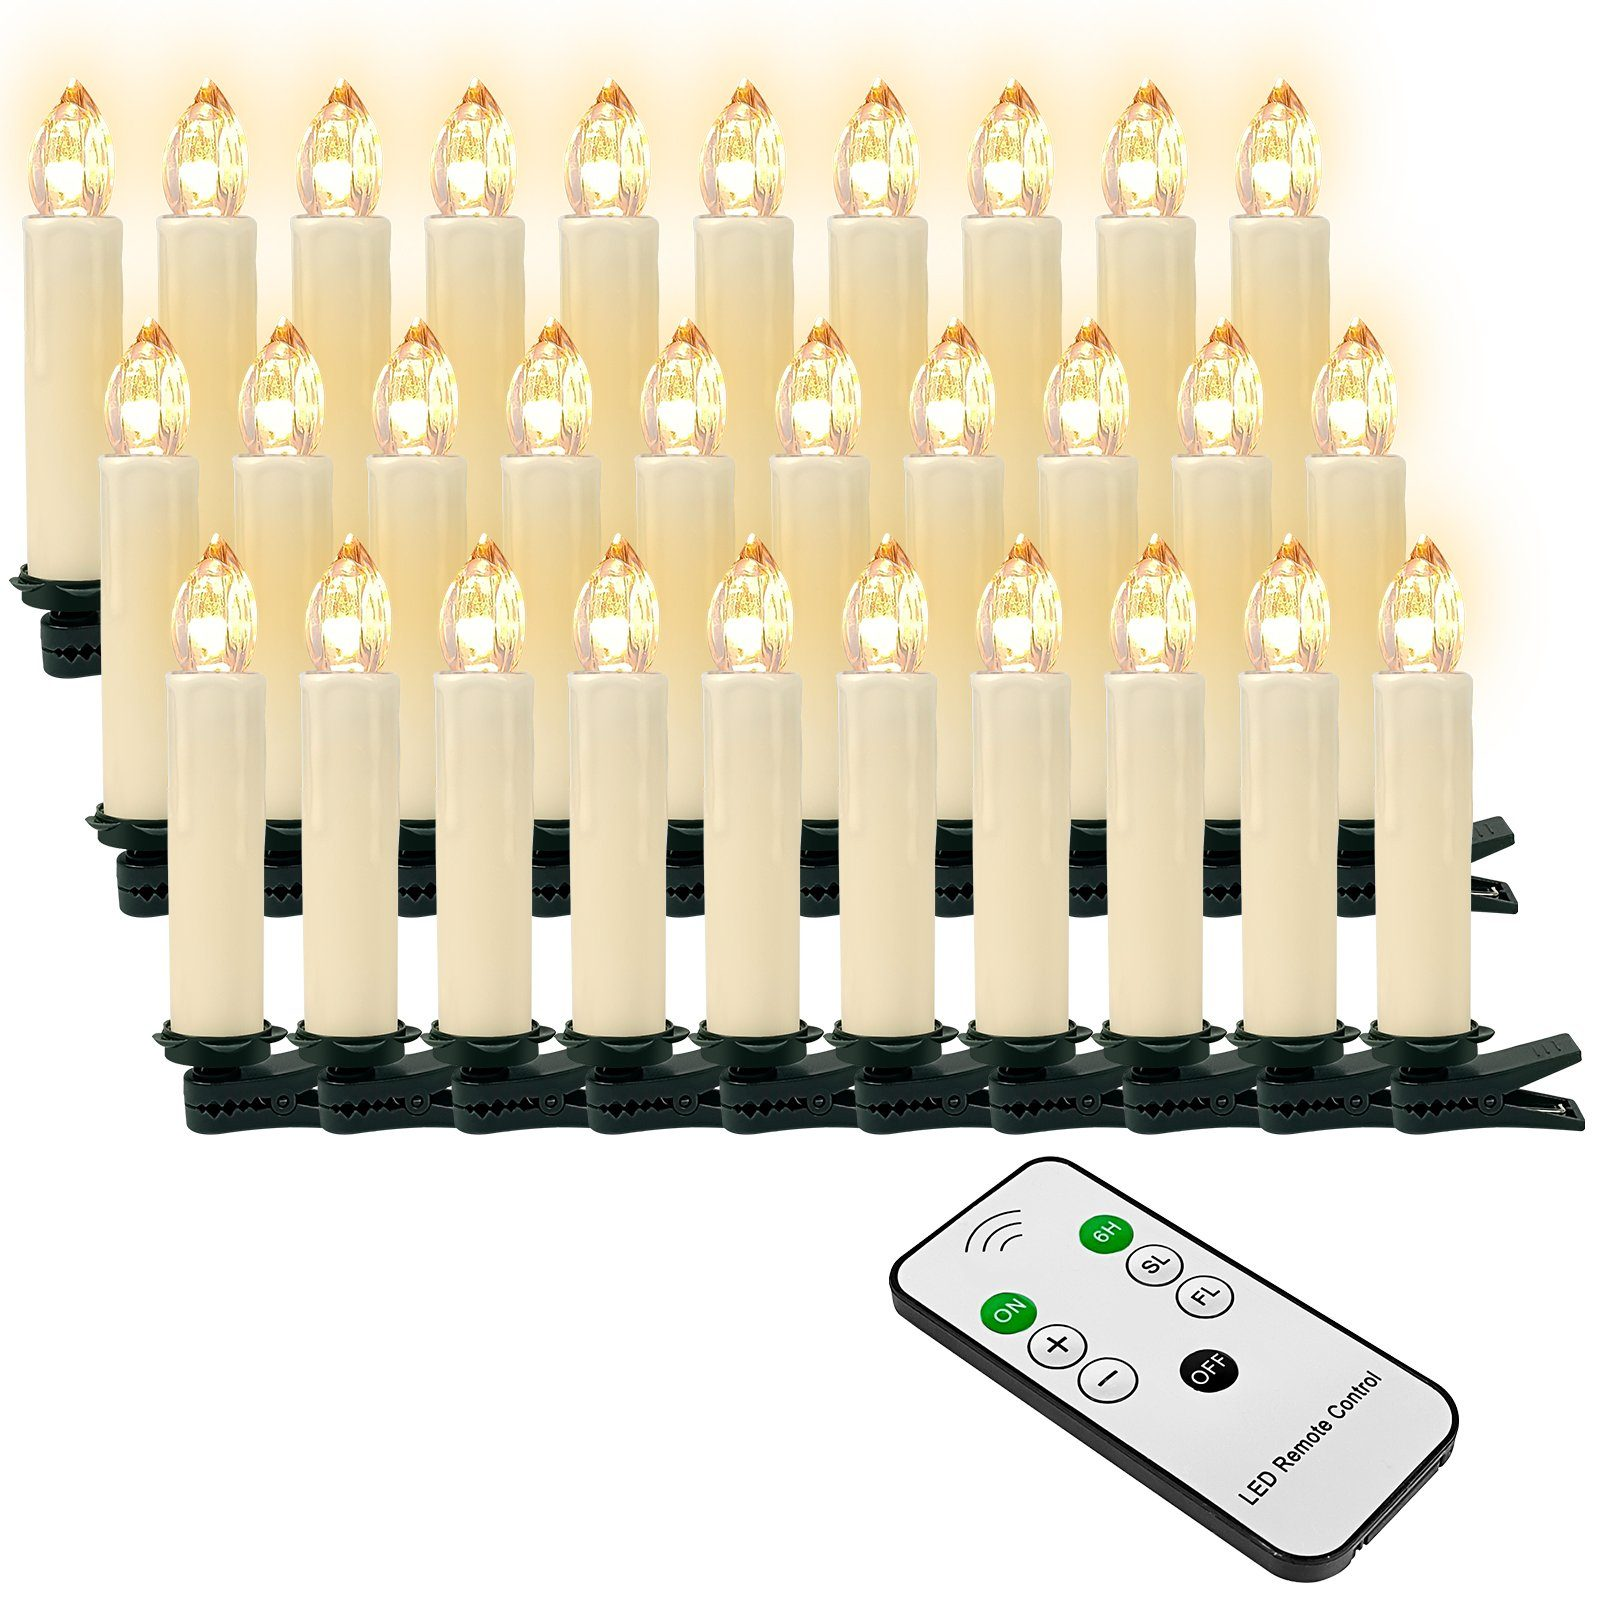 Creme CH040-B kabellose GOTOLL 40 LED-Kerze Weihnachtskerzen, LED Beige